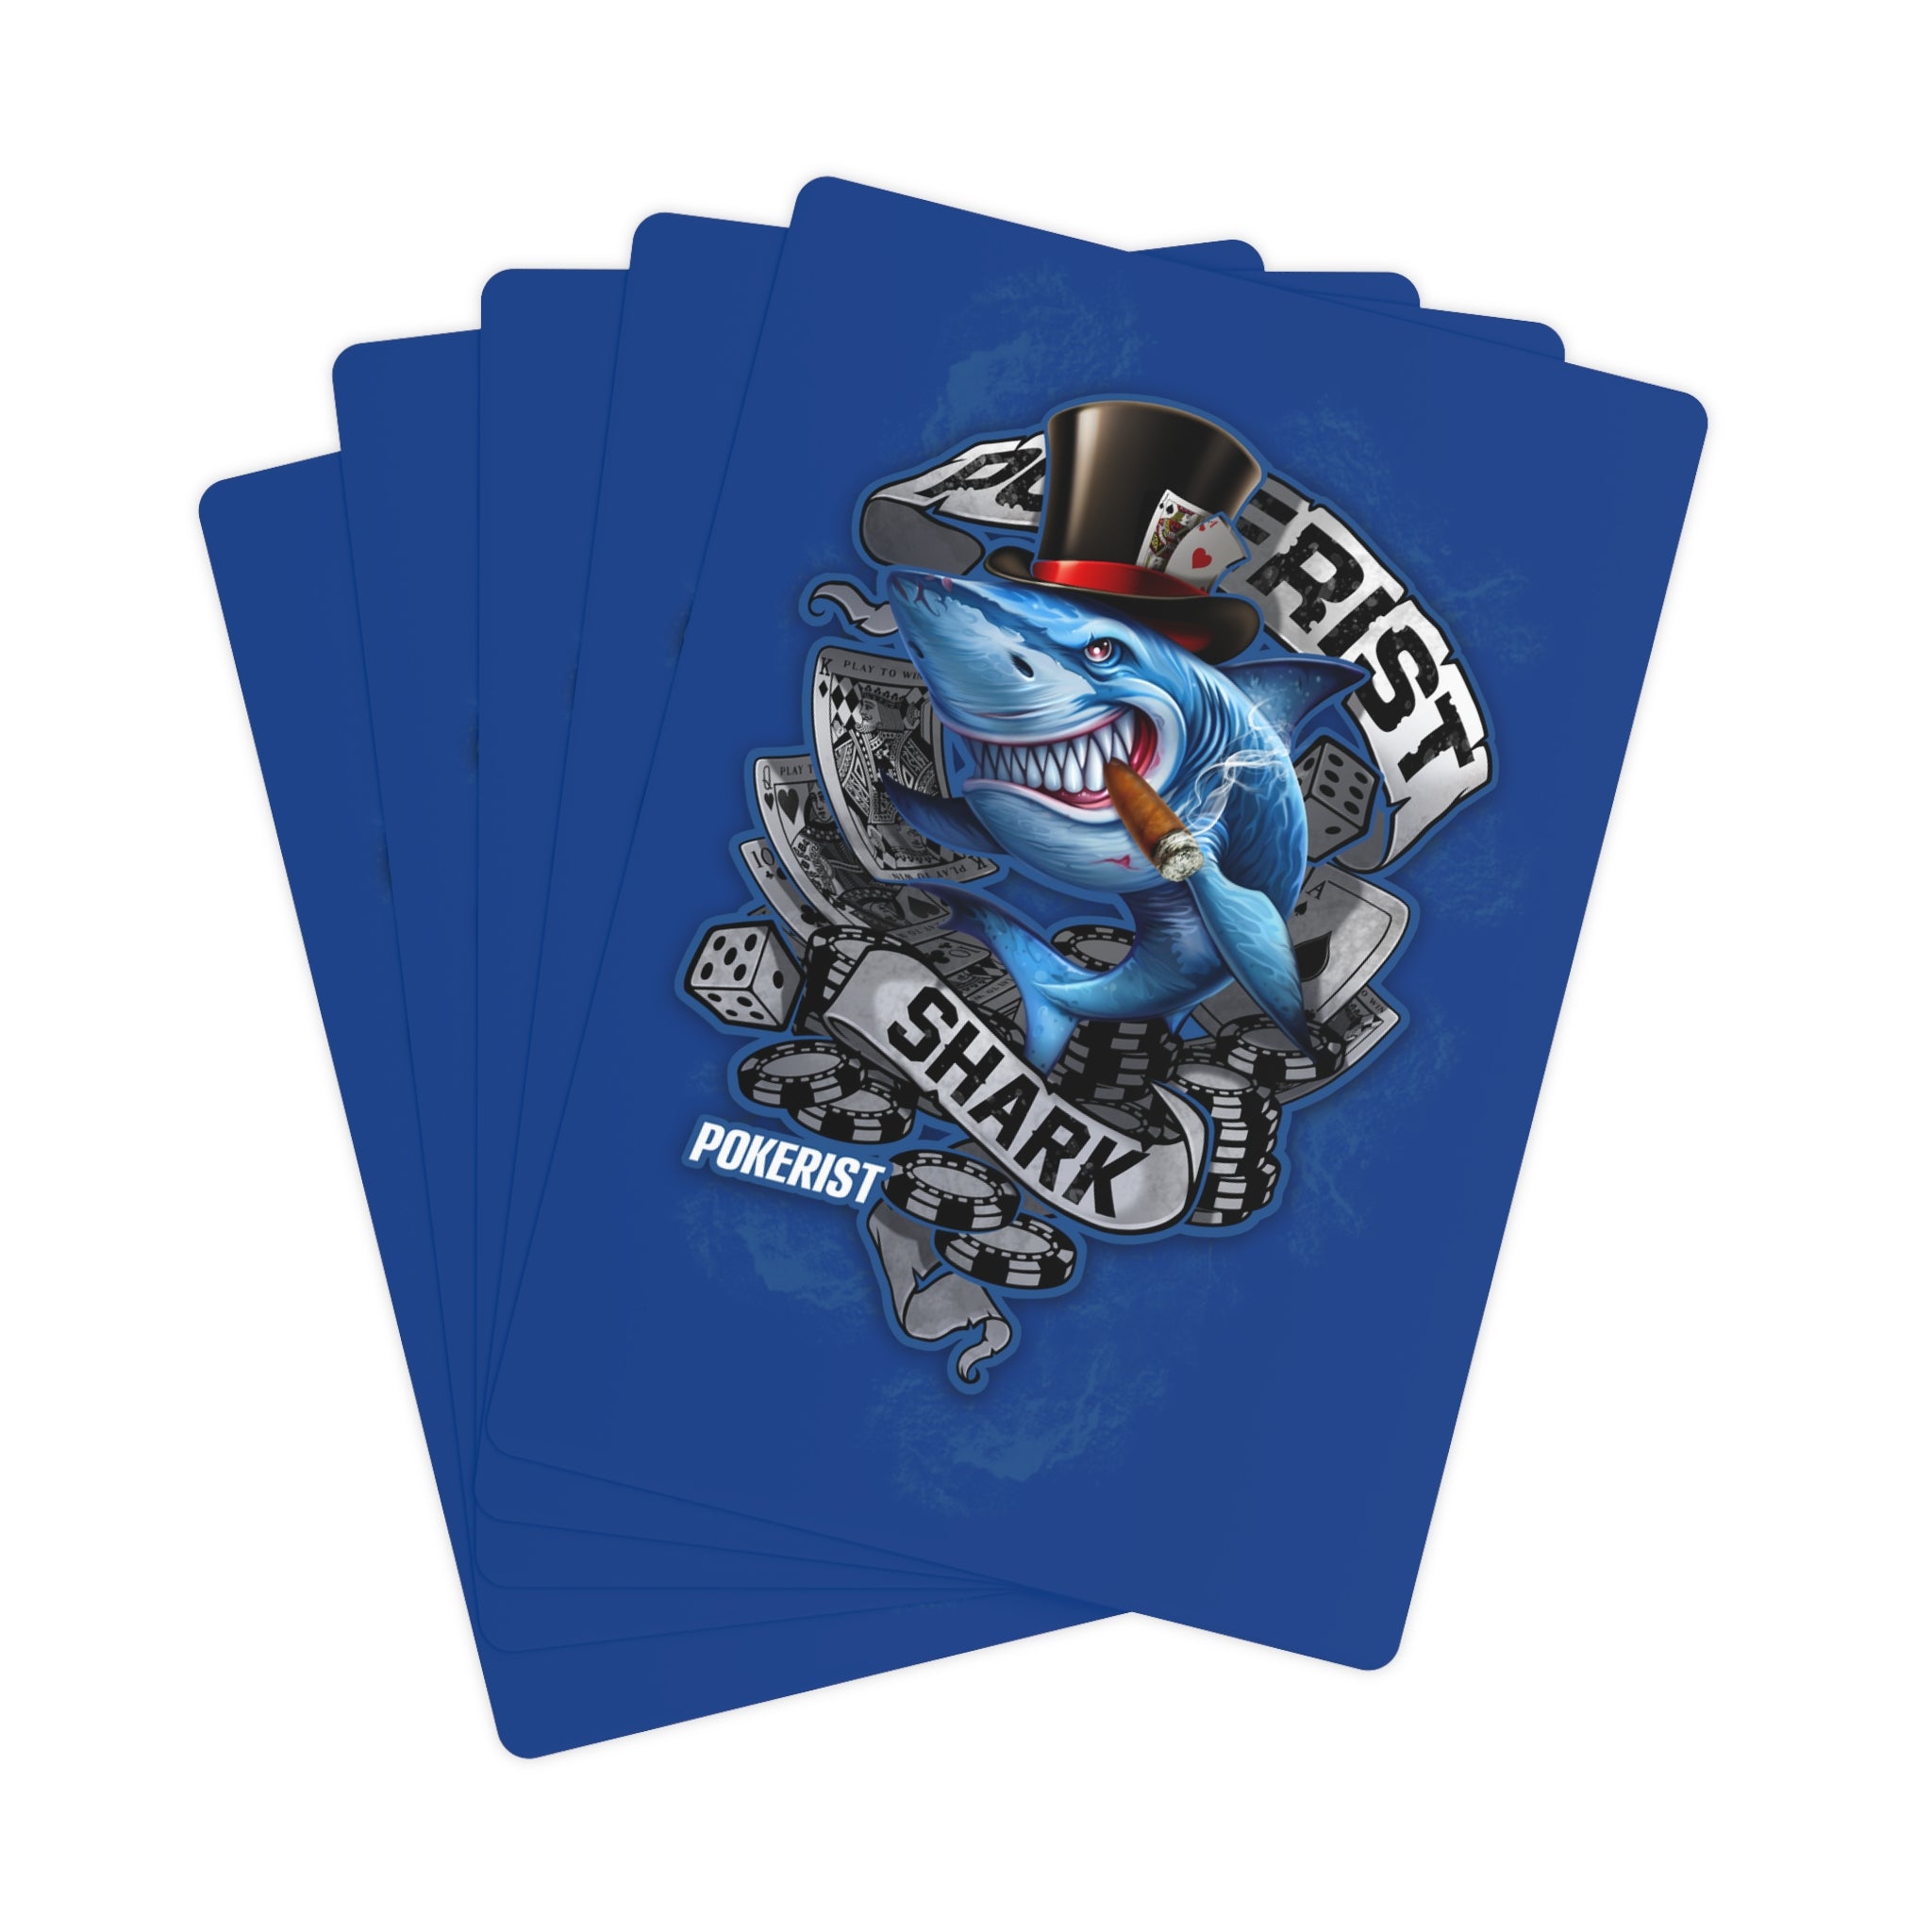 Pokerist Shark  - Poker Cards